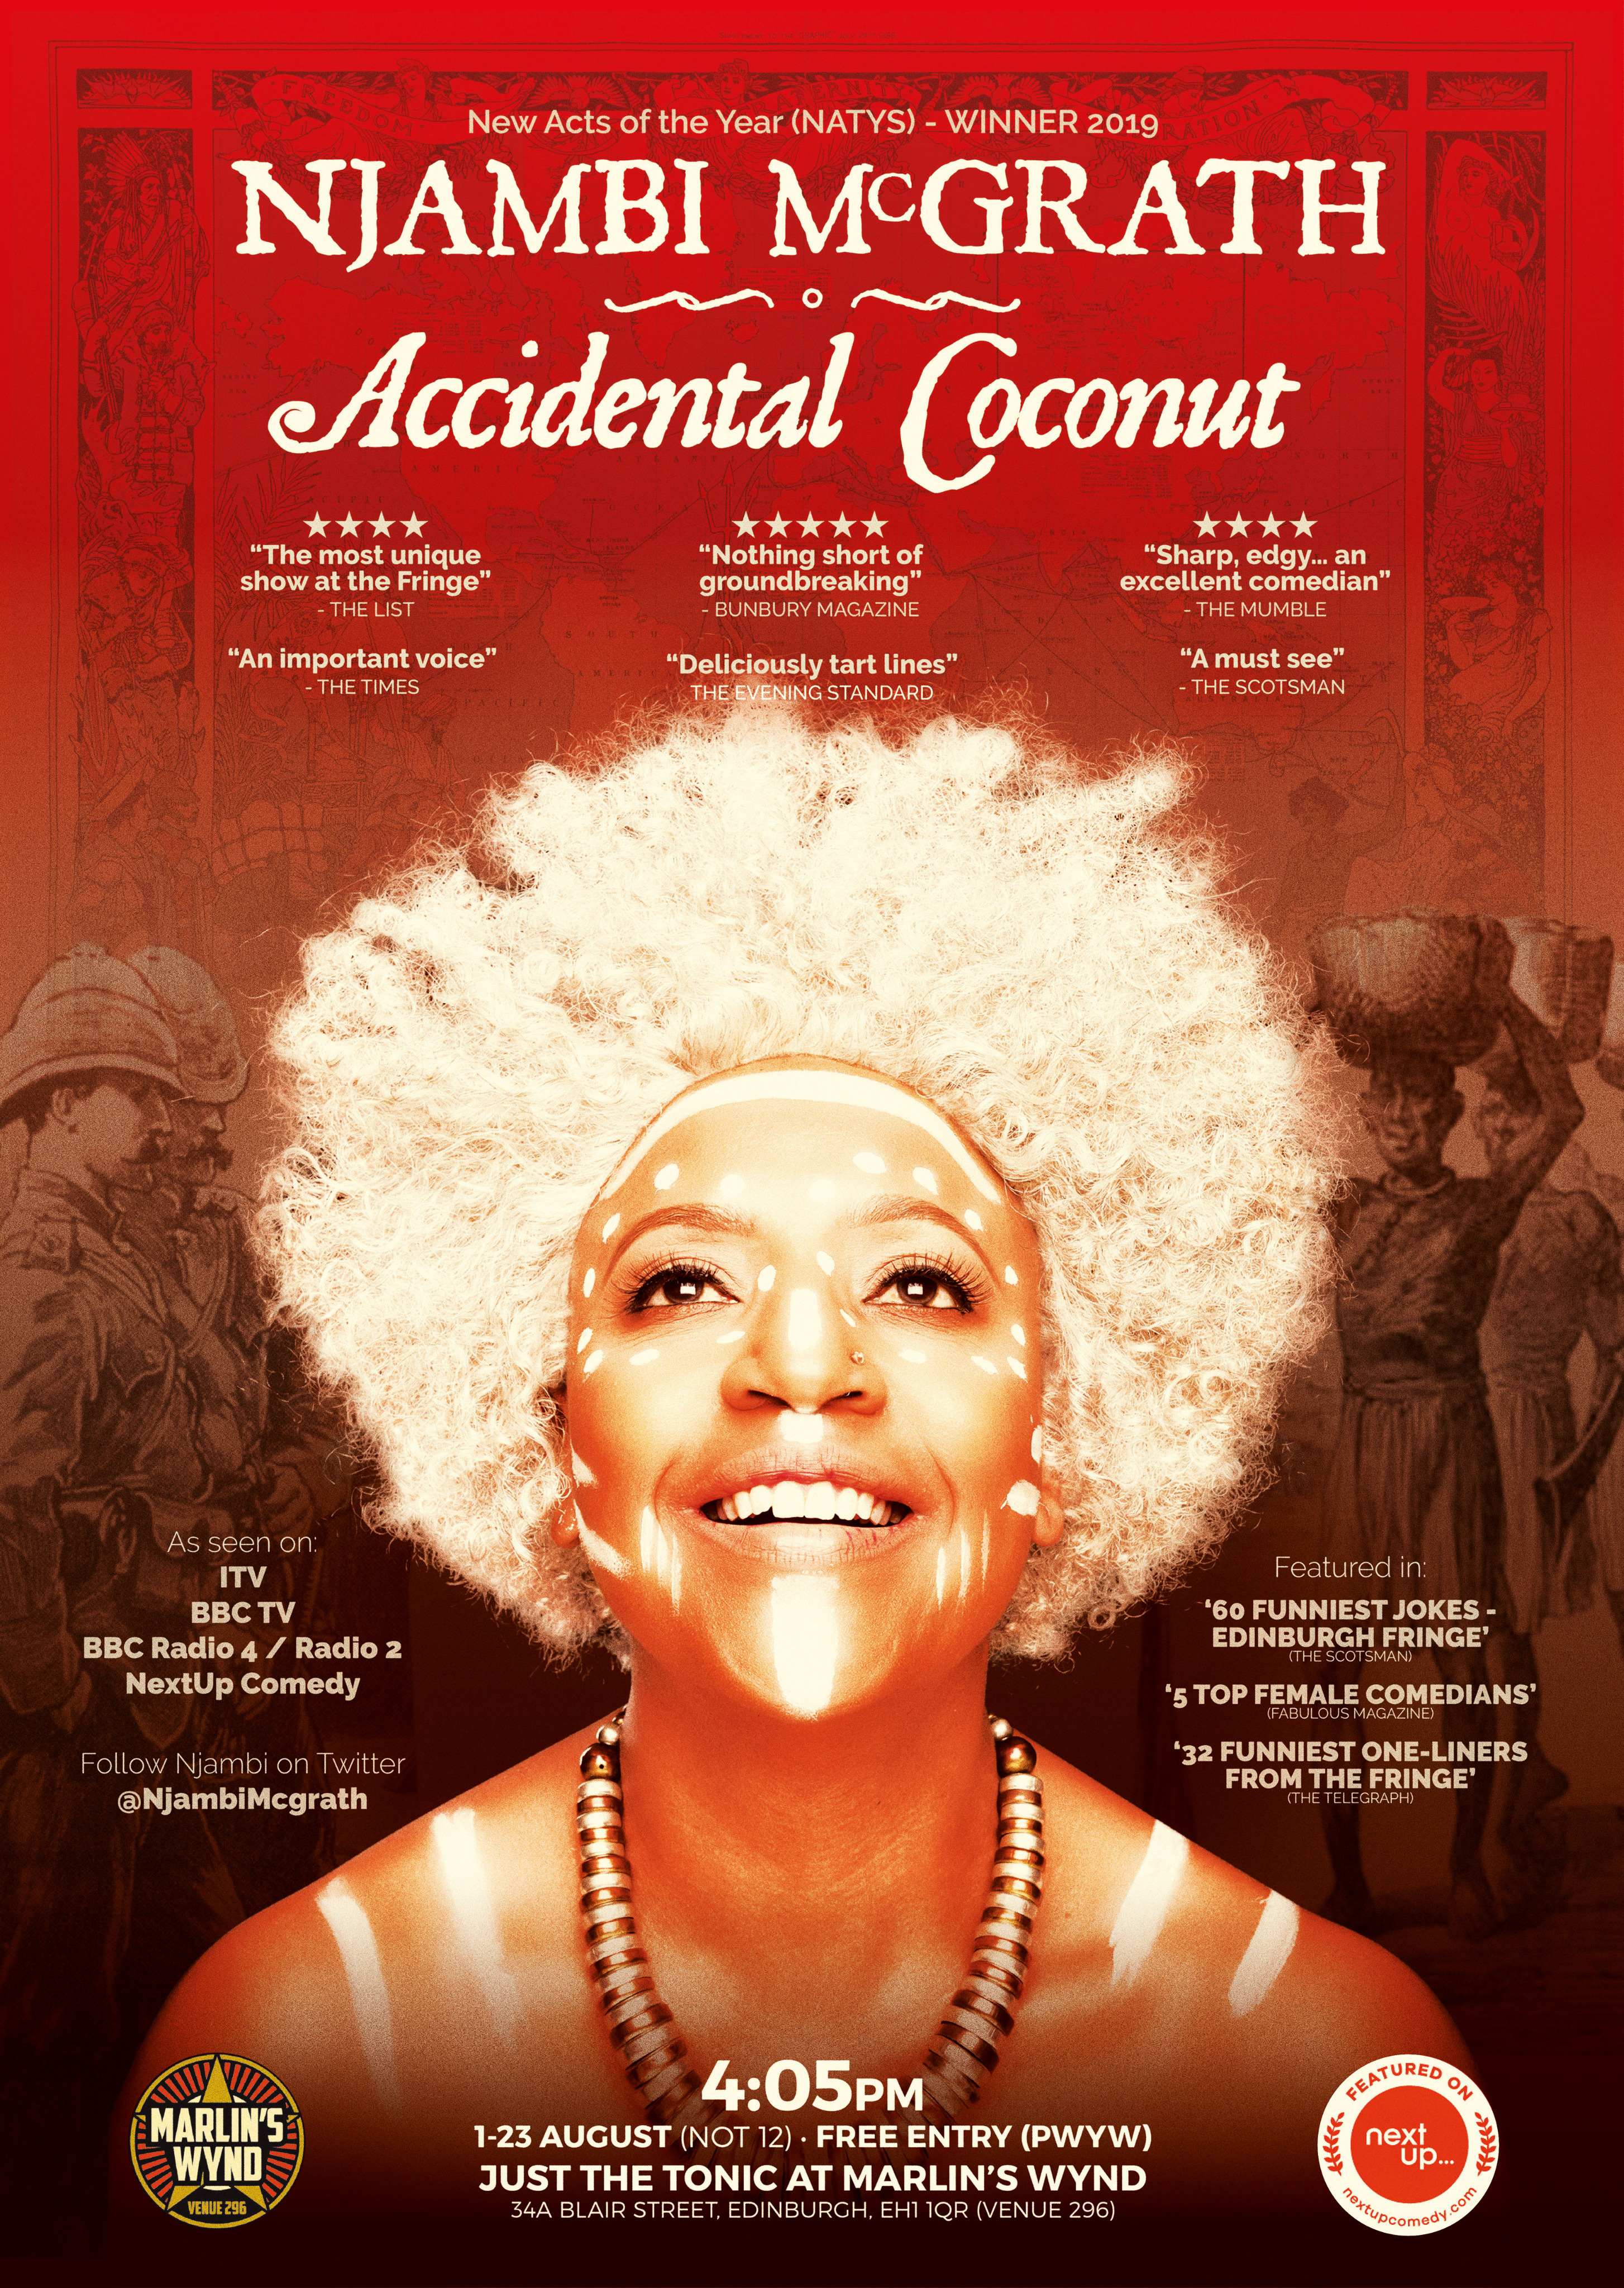 The poster for Njambi McGrath: Accidental Coconut